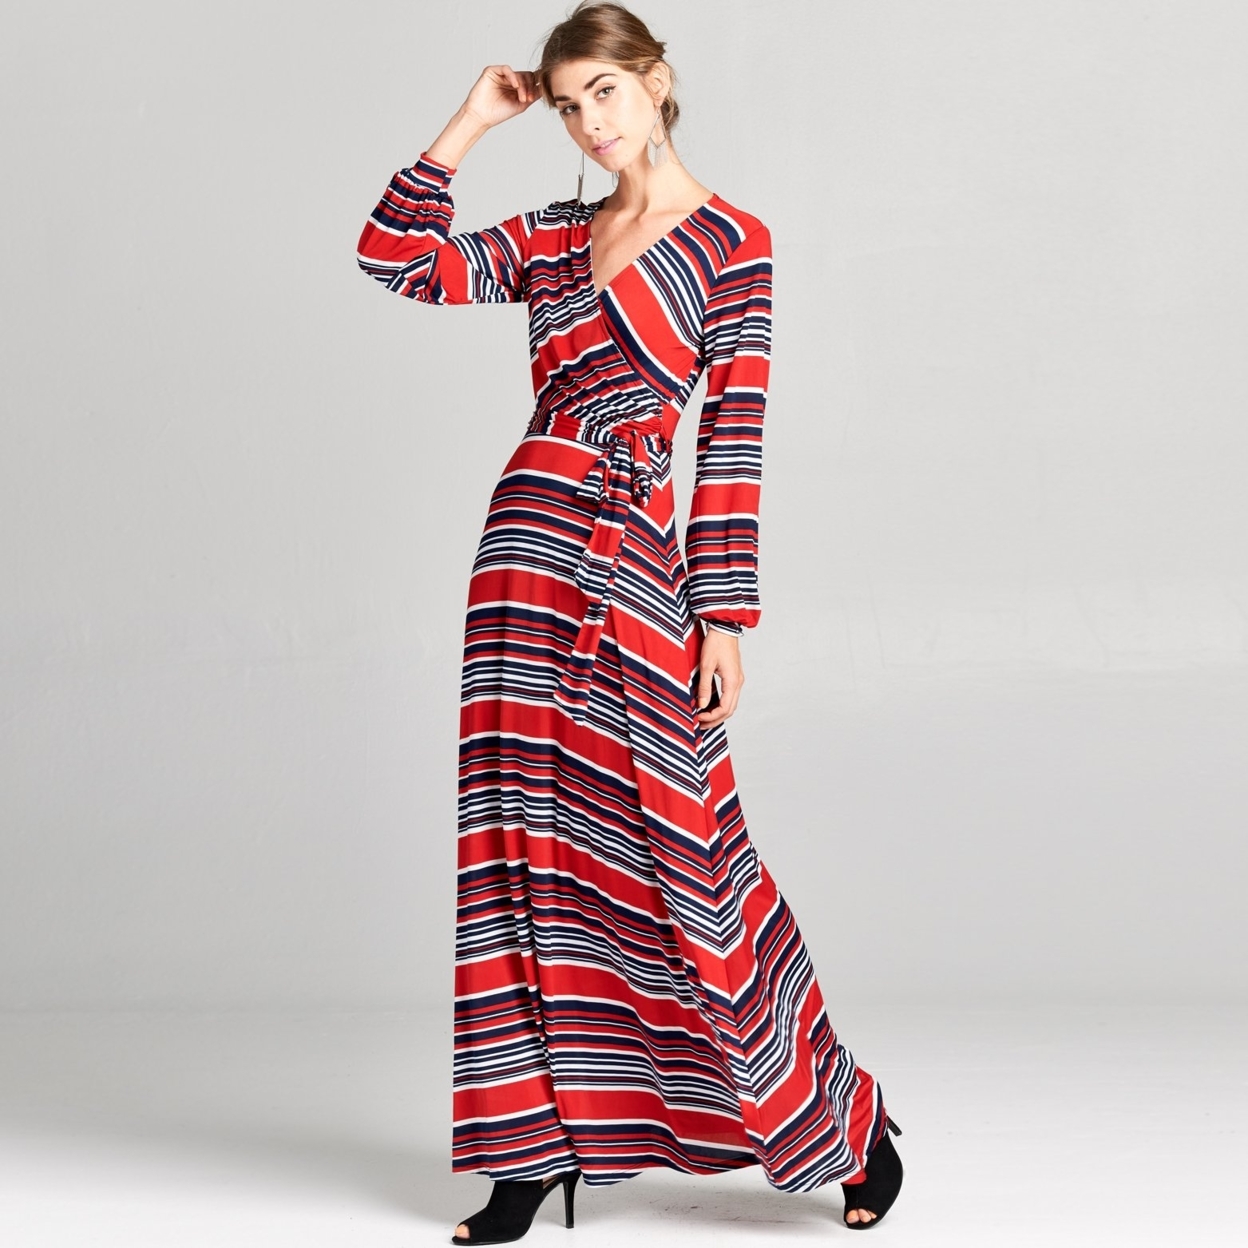 Cuffed Sleeve Venechia Stripe Dress - Red/navy, Small (2-6)